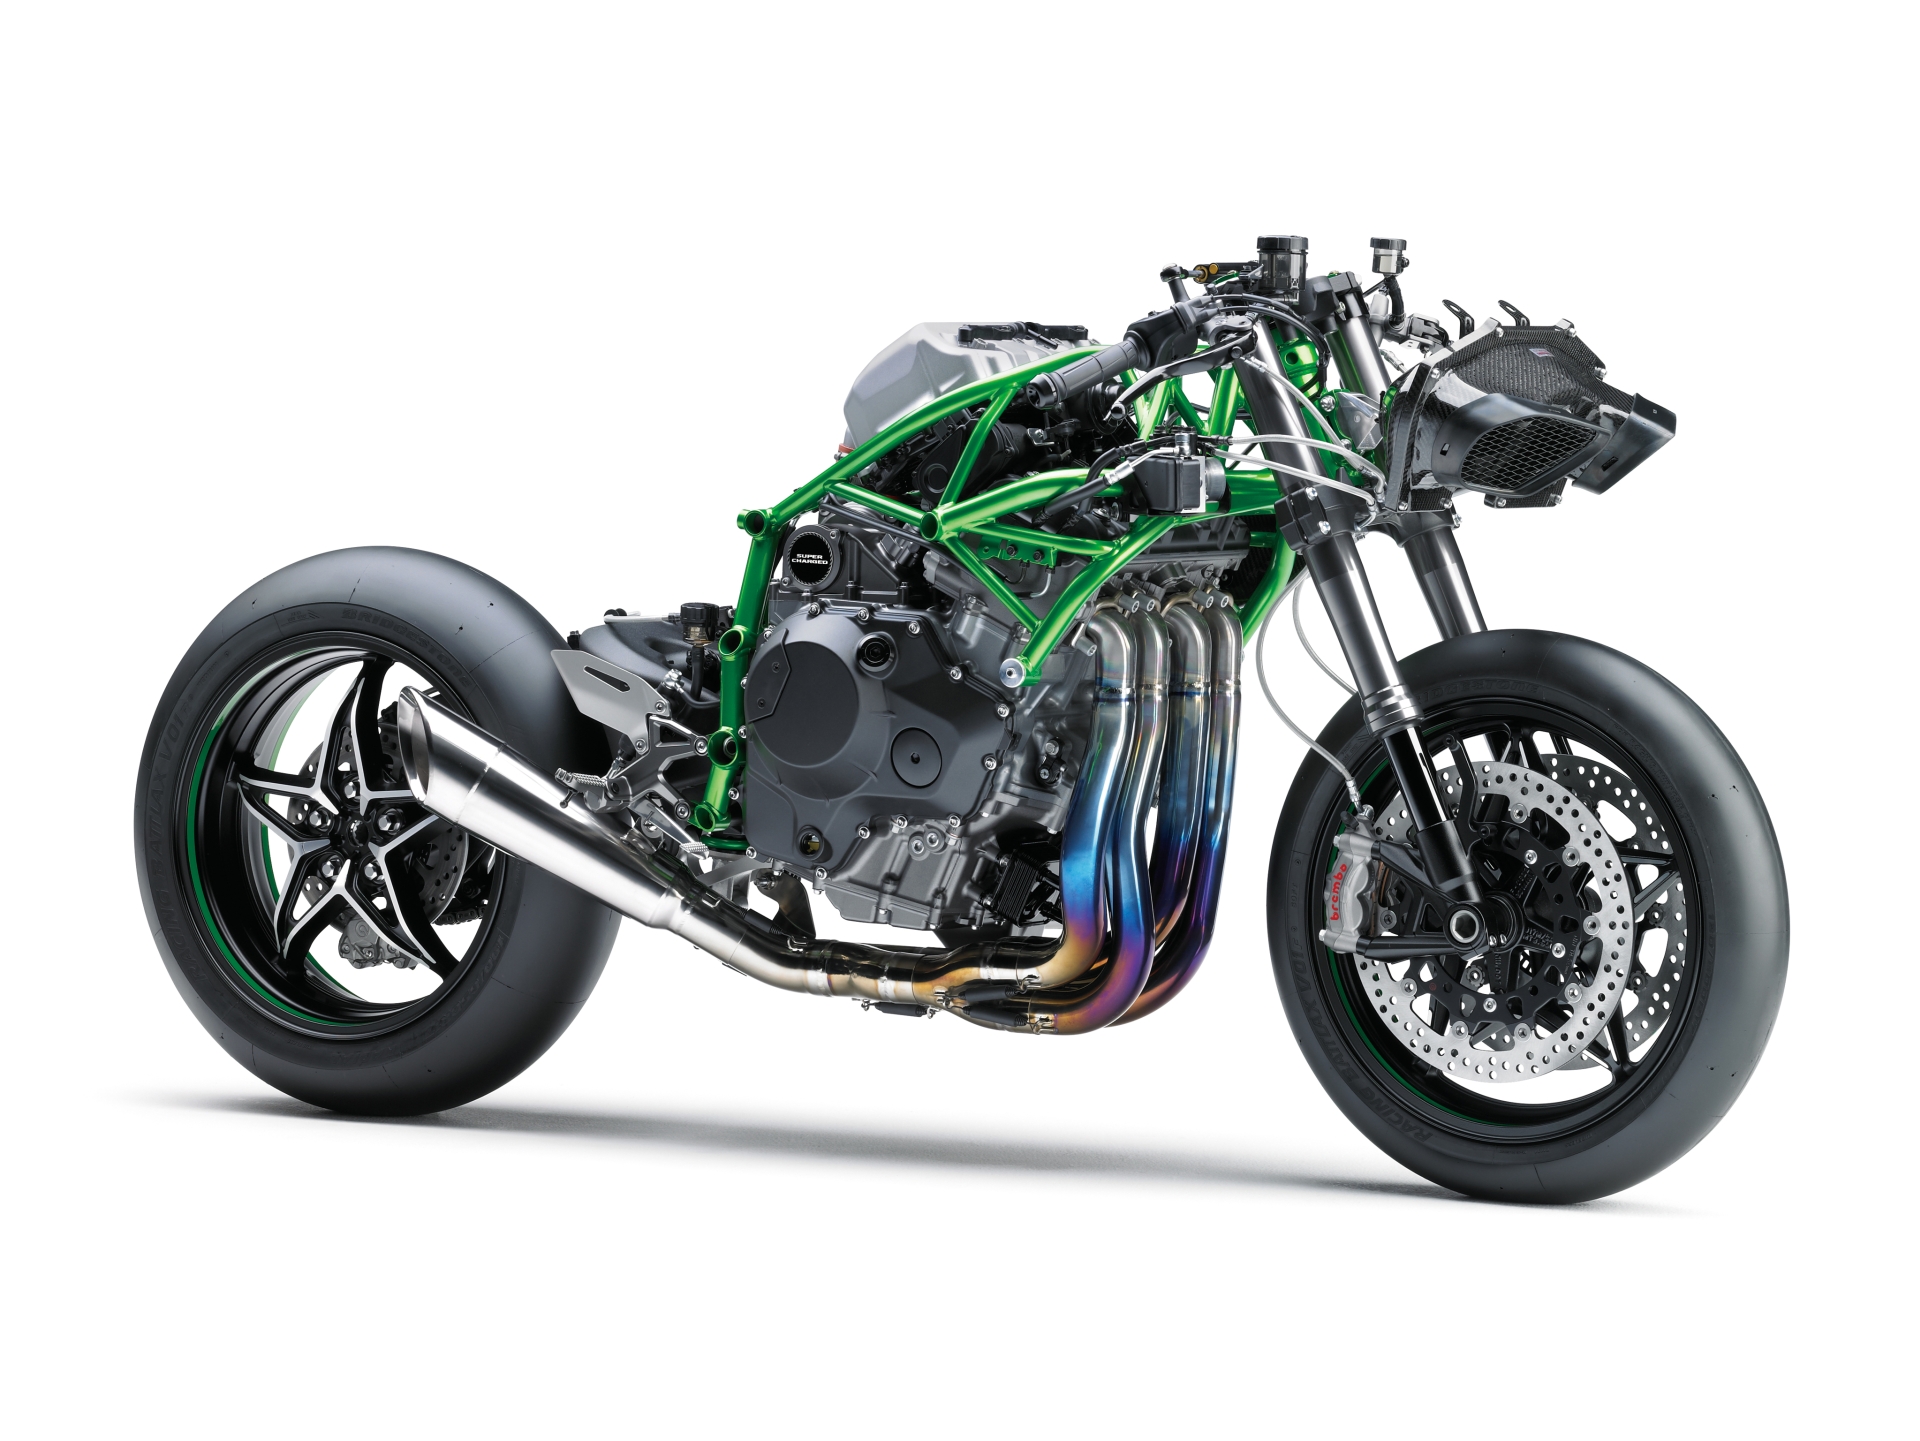 Strålende Tanke fumle Kawasaki Ninja H2 and H2R Prices Confirmed - autoevolution